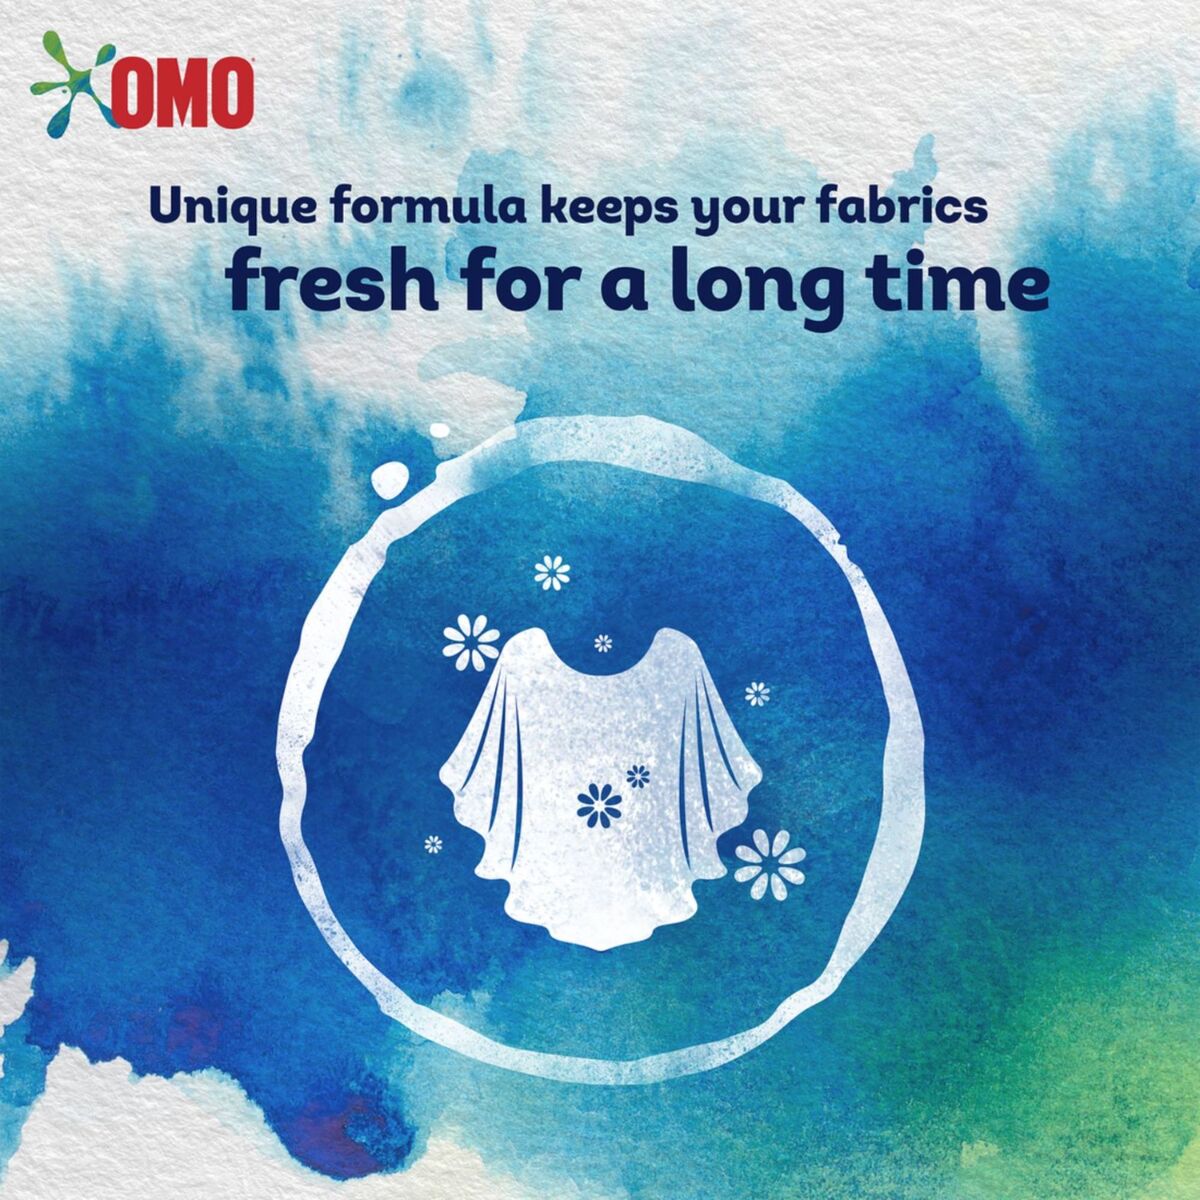 Omo Automatic Anti-Bacterial Washing Powder 6 kg